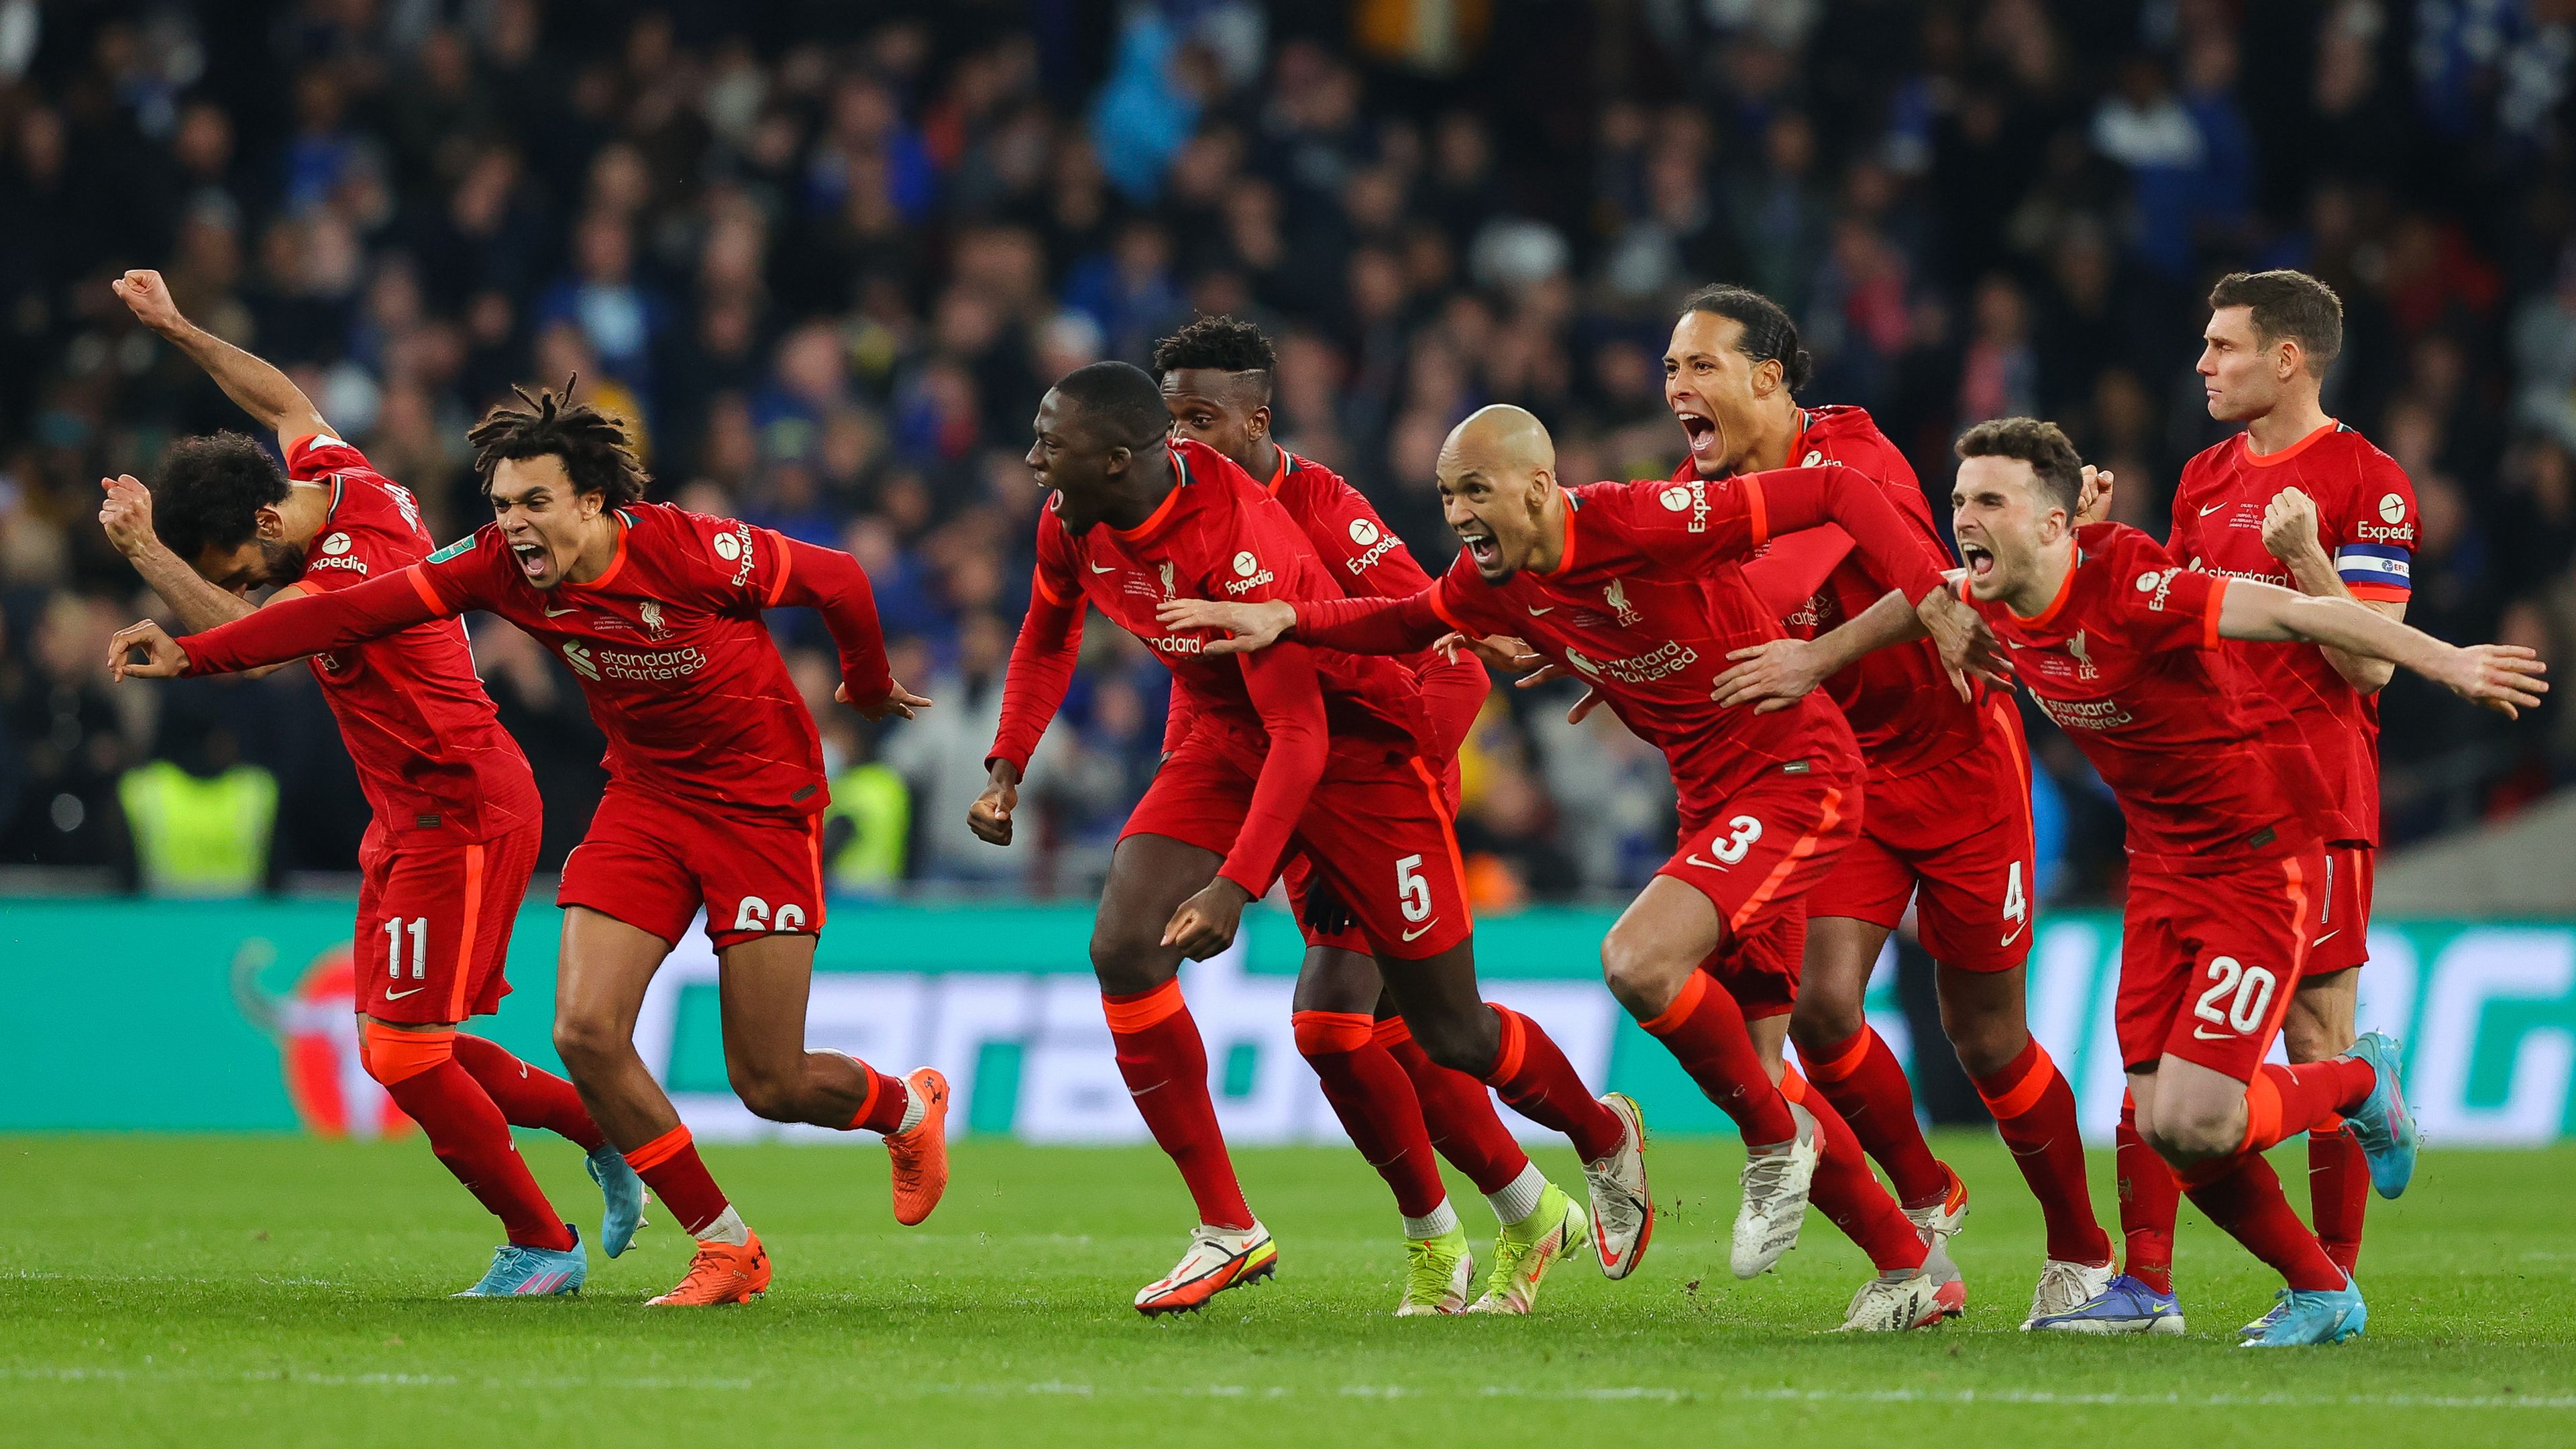 Chelsea's Kepa Arrizabalaga misses final penalty as Liverpool wins Carabao Cup